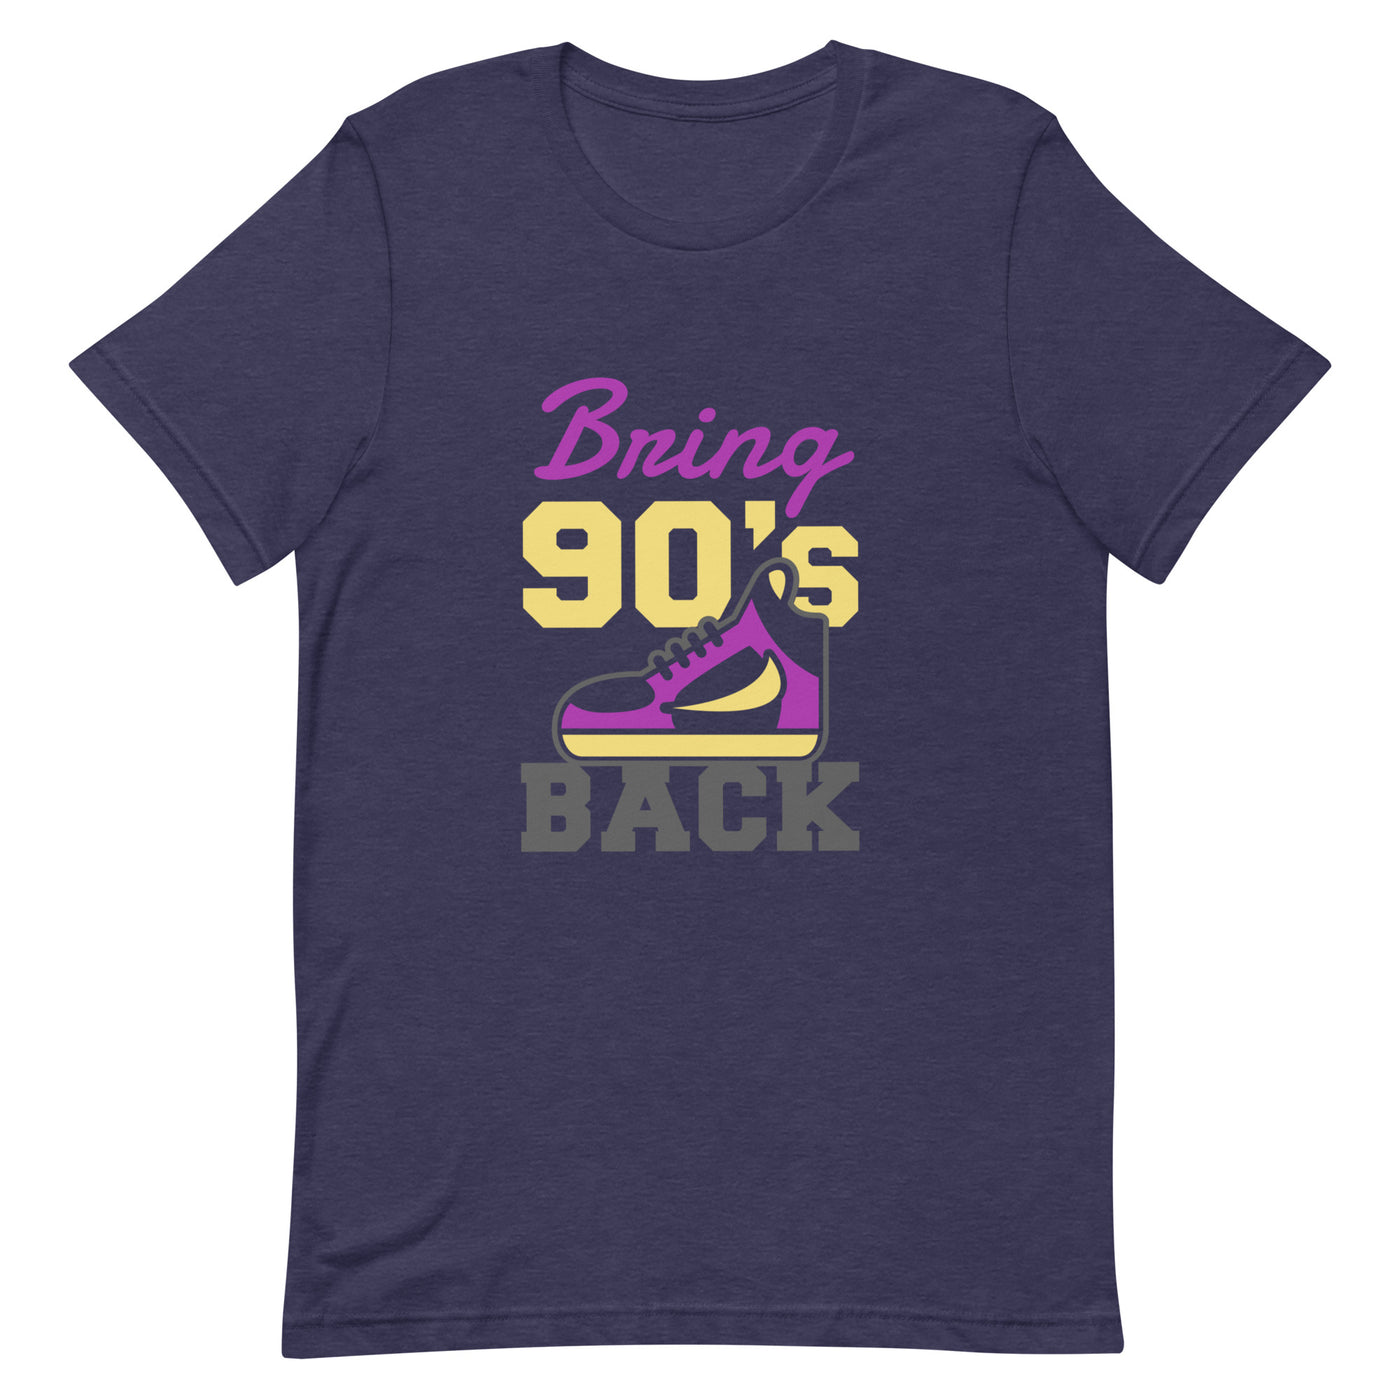 BRING THE 90'S BACK Unisex t-shirt